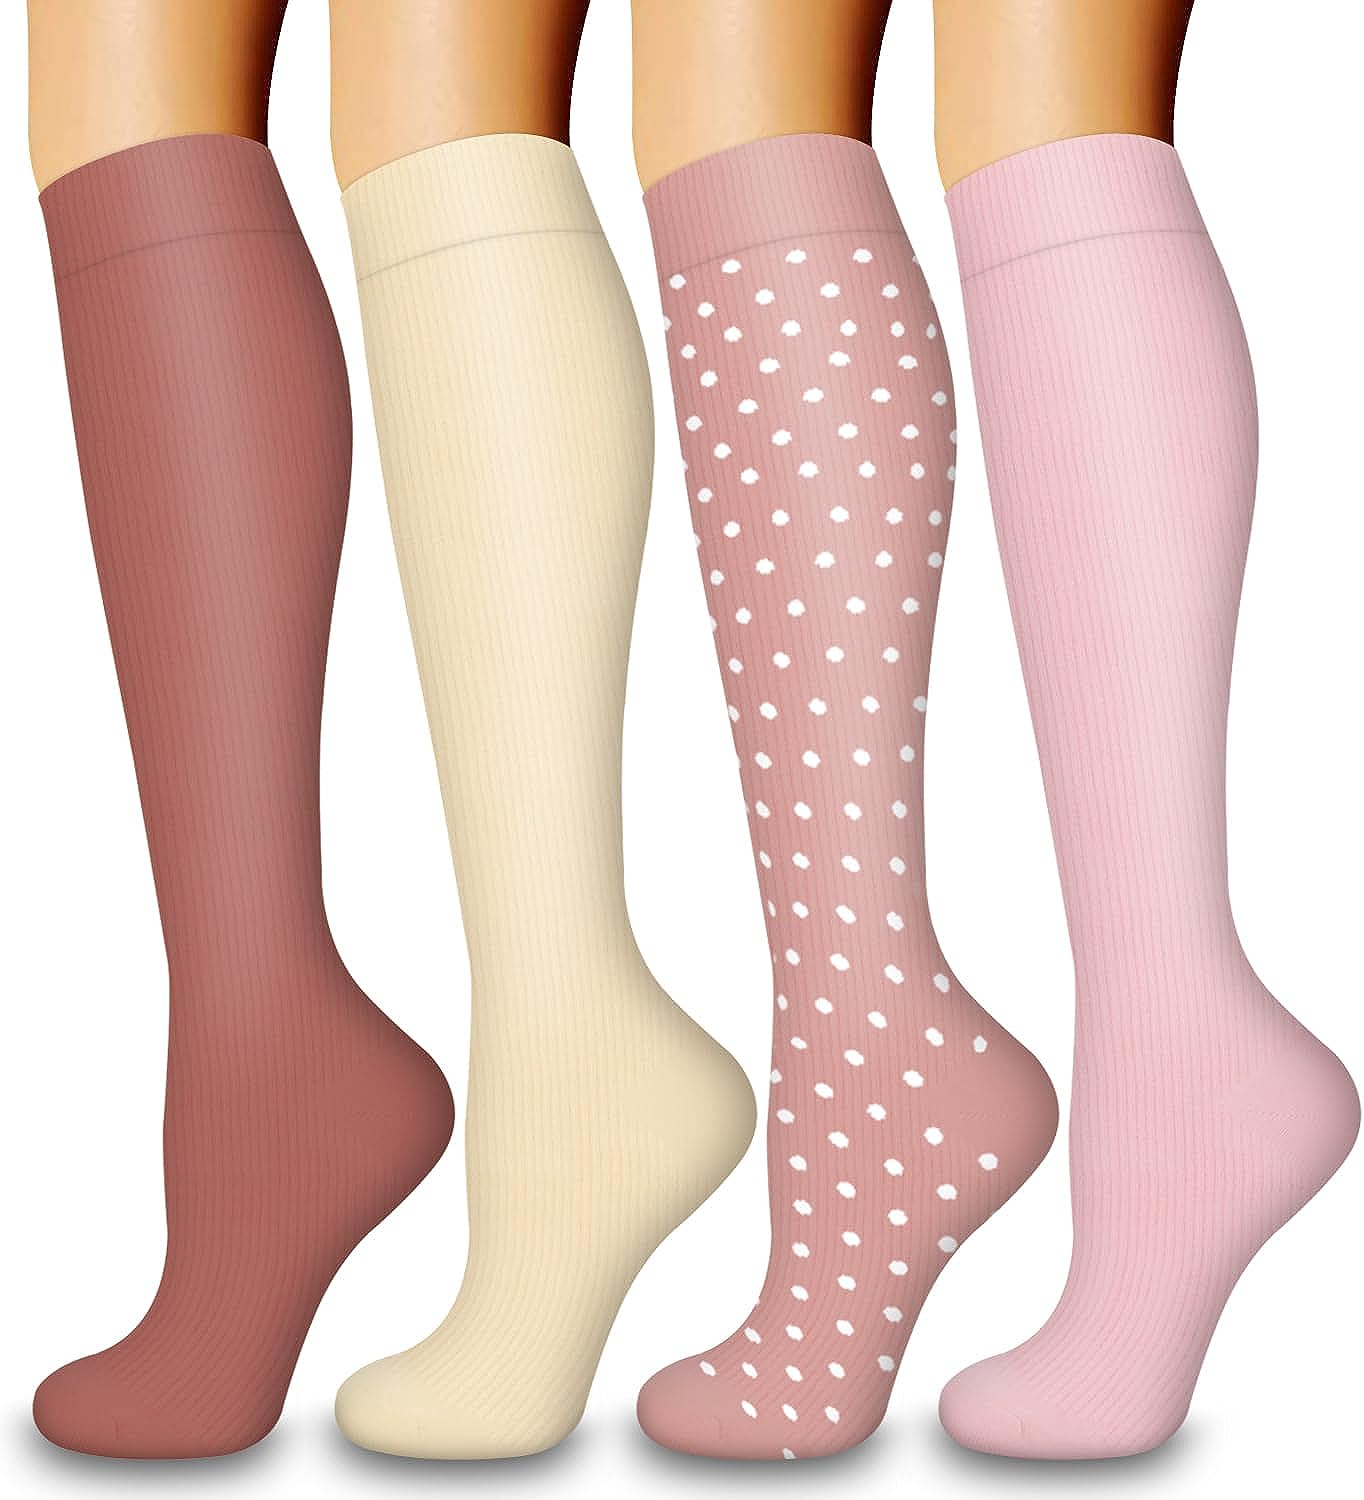 Laite Hebe Compression Socks For Women Men Circulation(8 Pairs),Socks-Best  For Running,Sports,Hiking,Flight Travel,Pregnancy